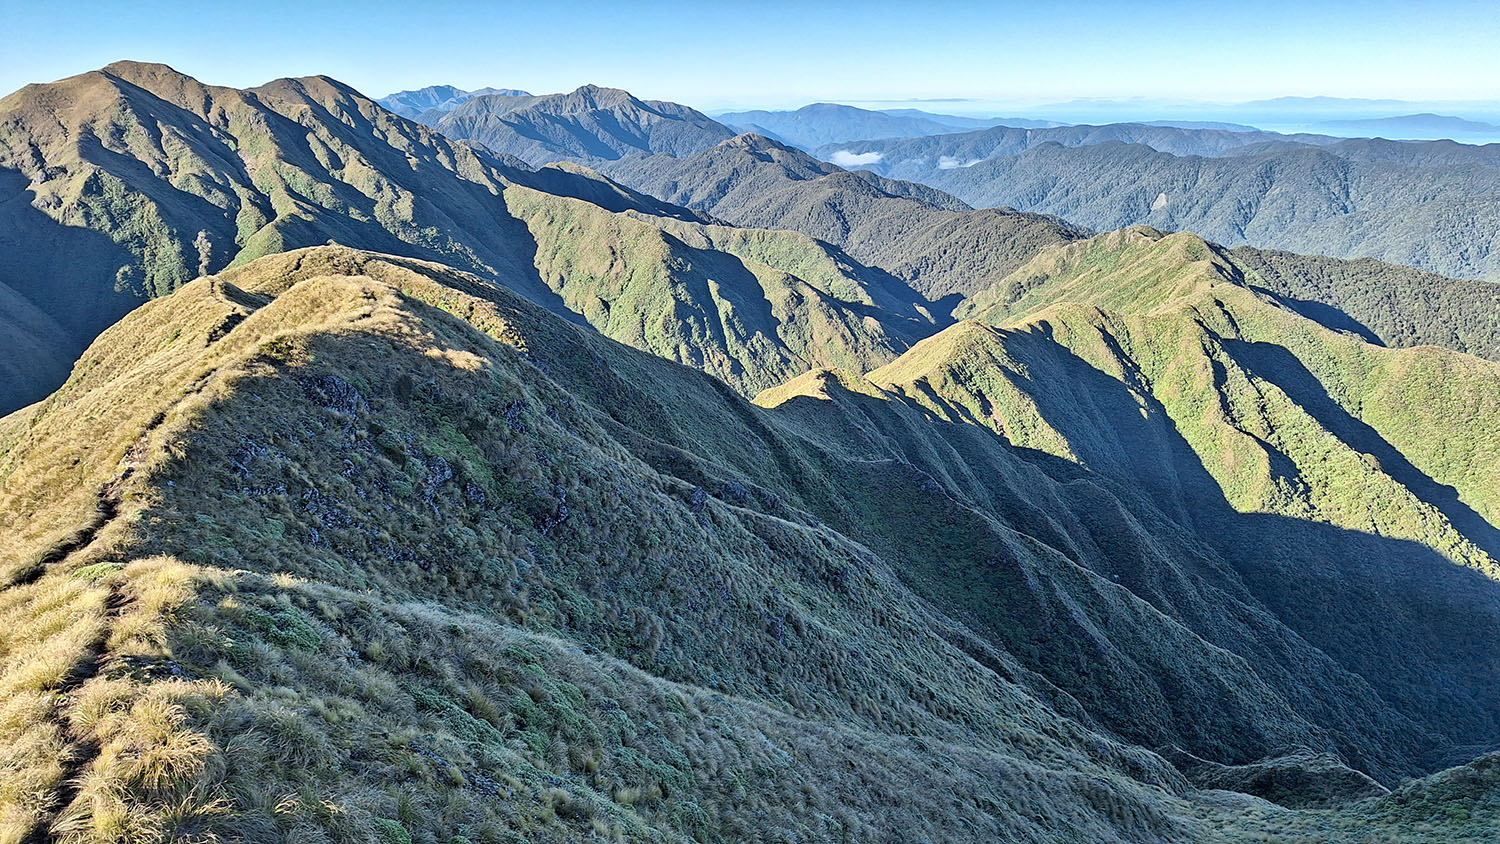 View of the Tararua Ranges, a vast mountain range